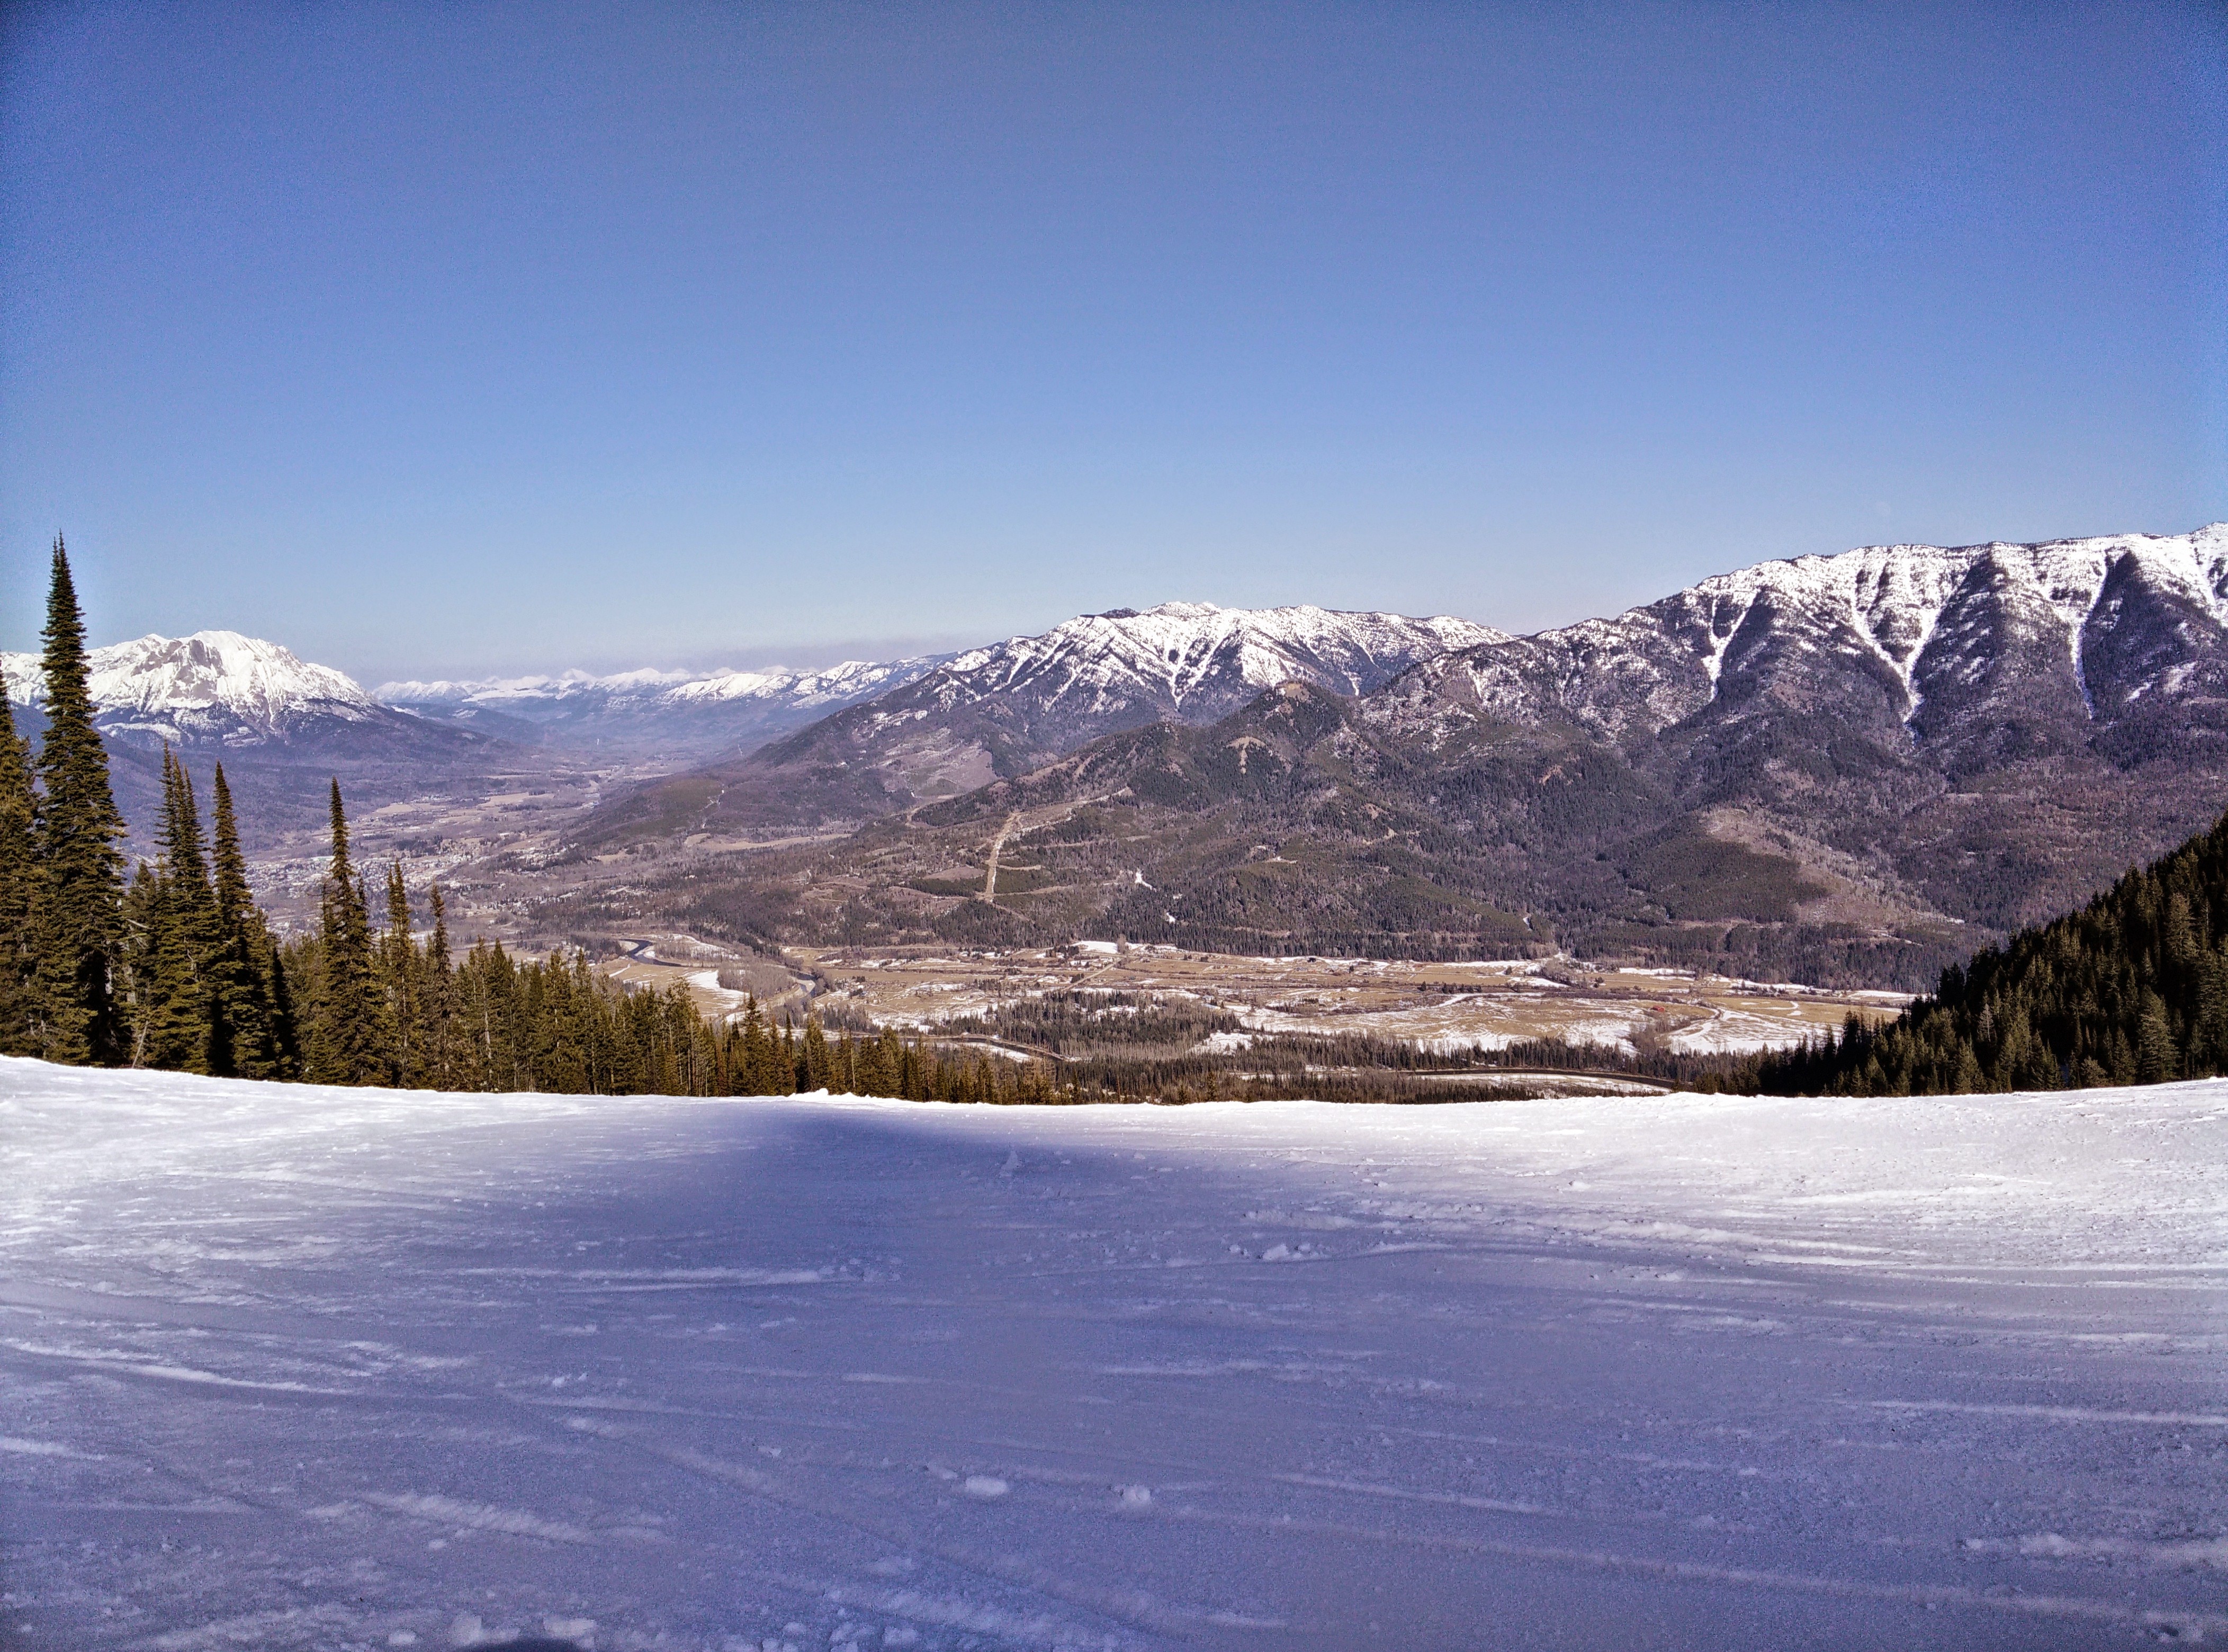 General 4208x3120 ski resort snow landscape valley mountains snowy mountain winter trees sky